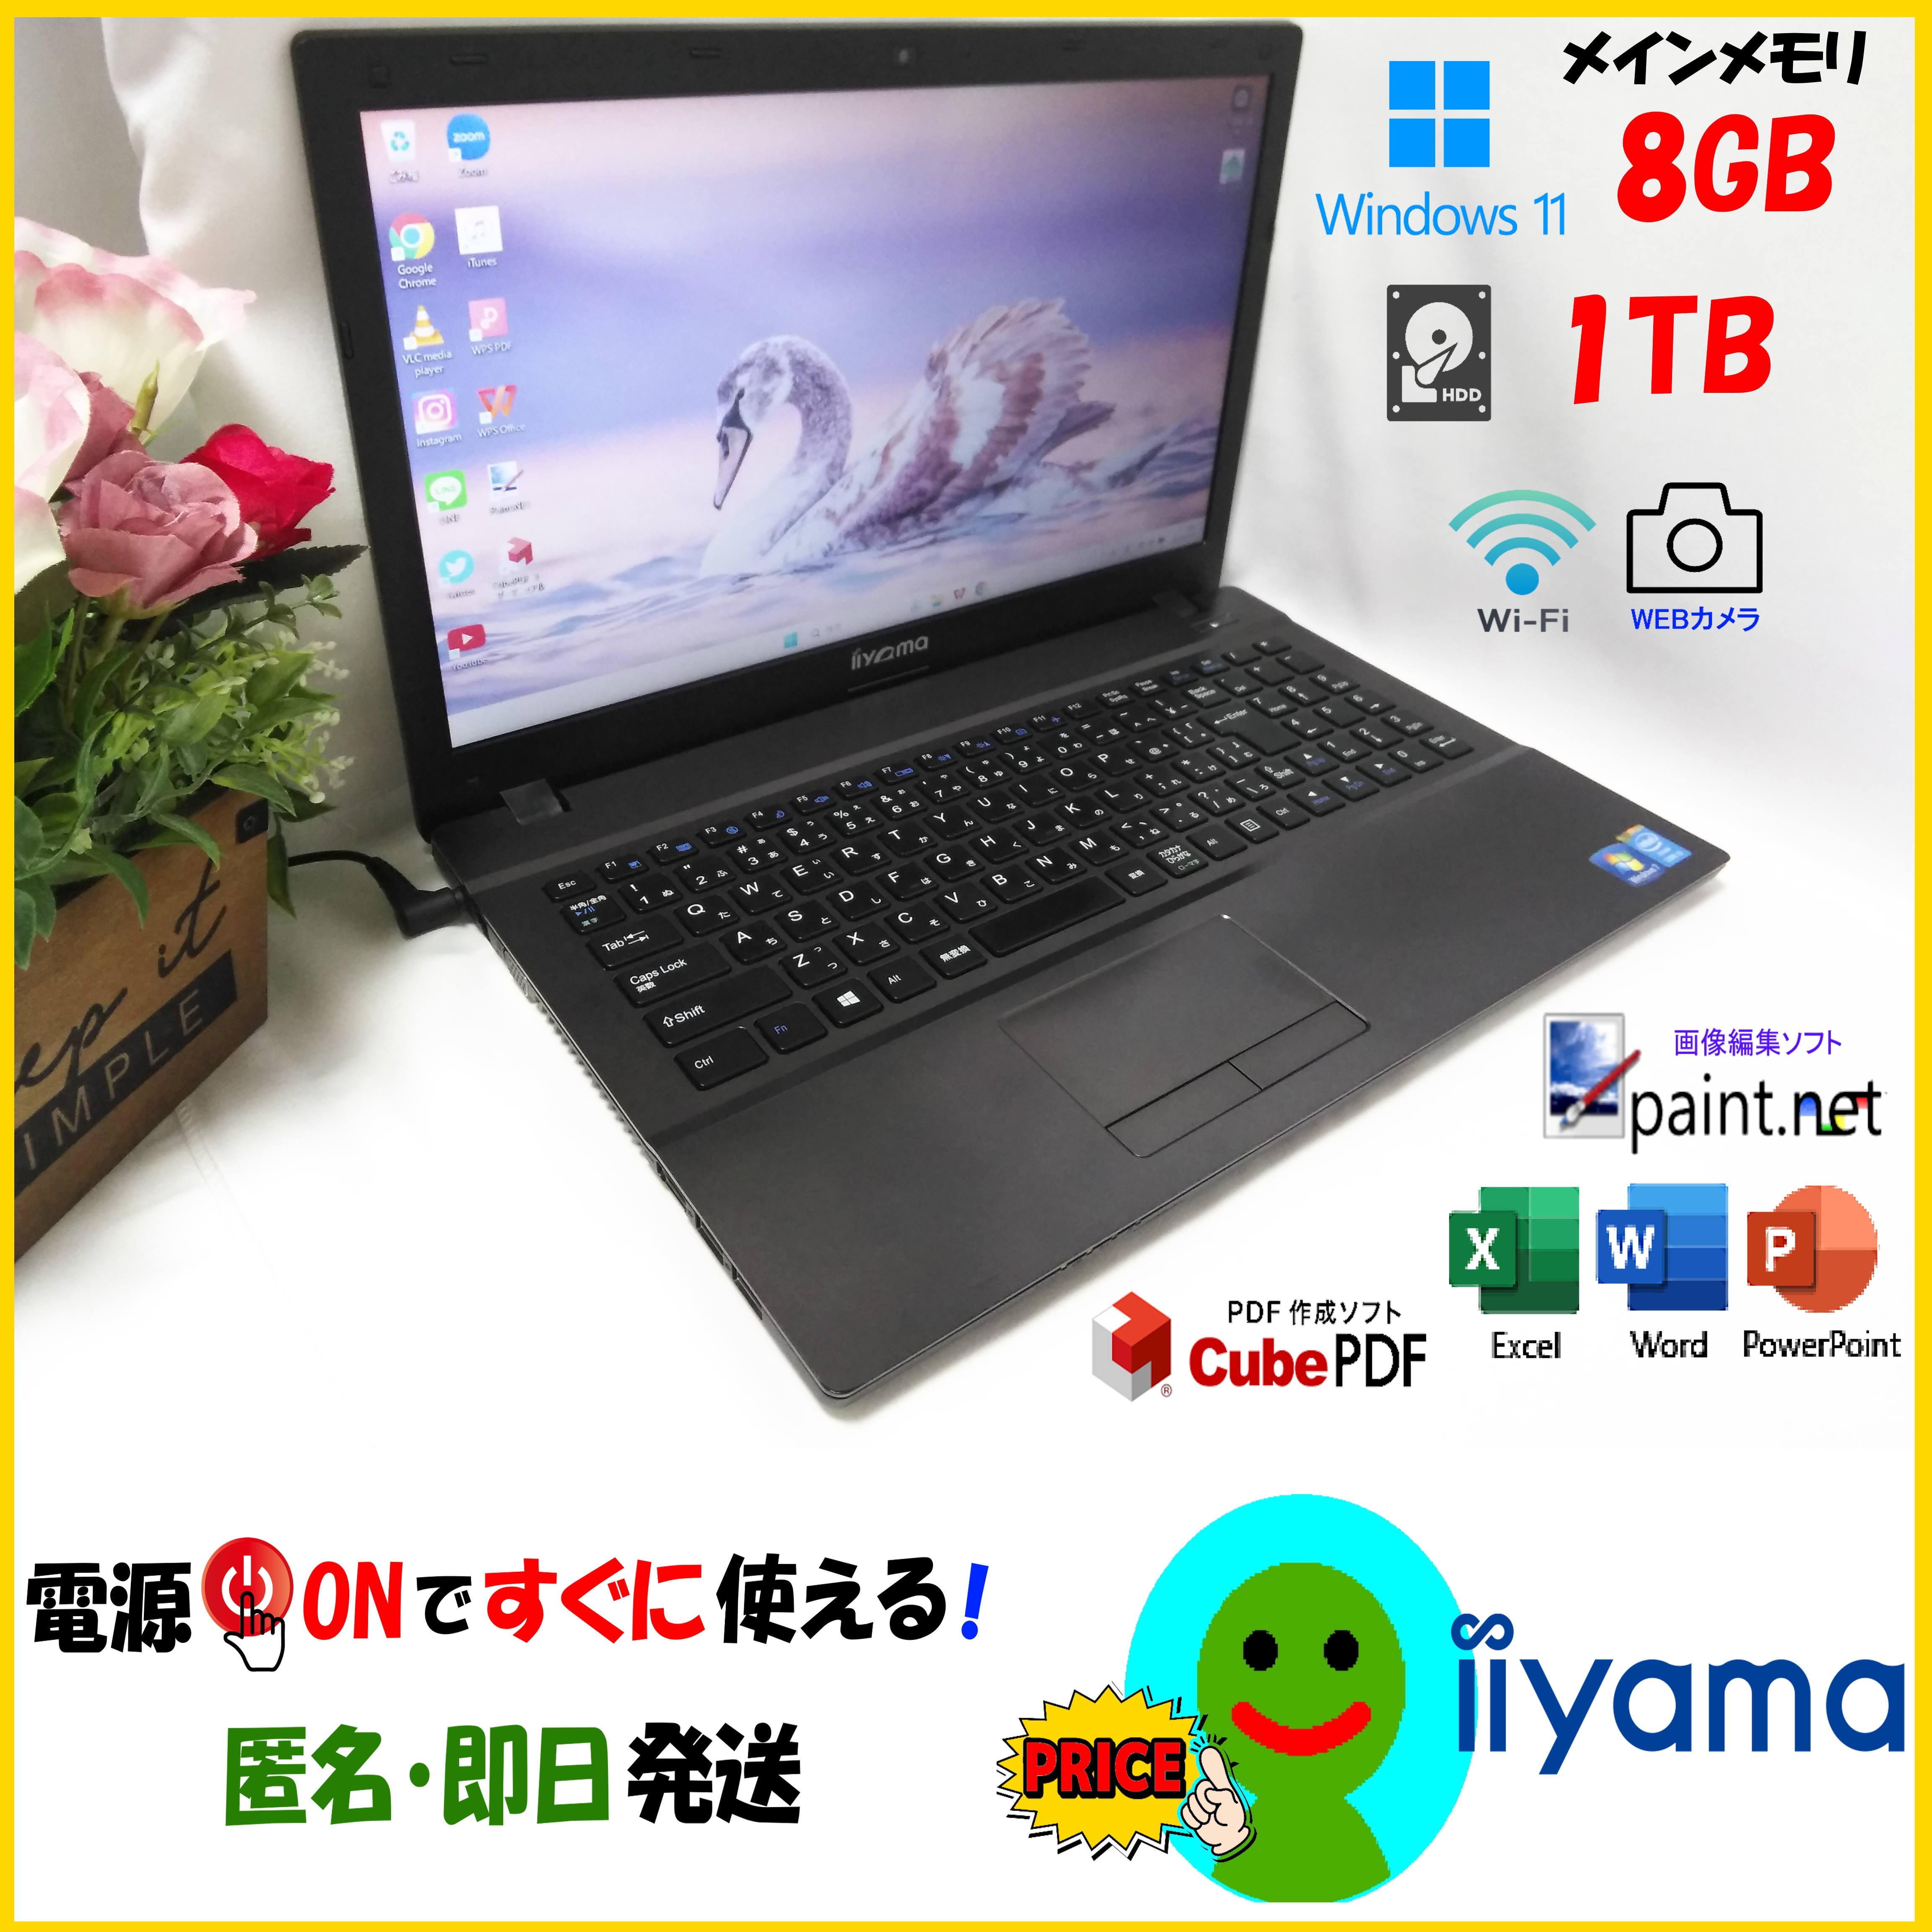 iiyama W550SU W54_55SU1,SUW | 中古ノートパソコン販売 / cyunsuke-pc